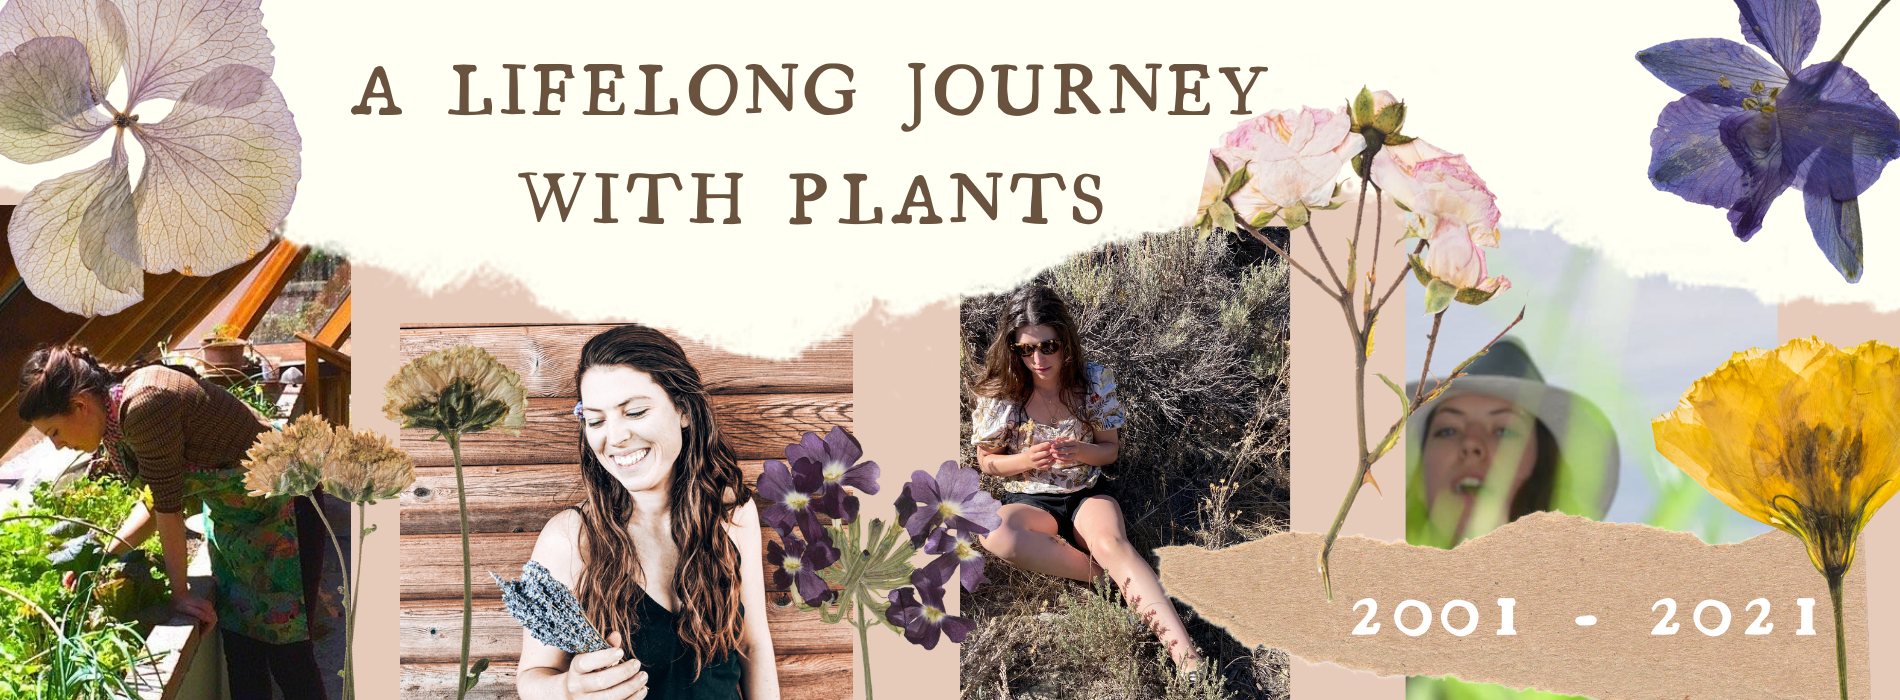 A lifelong journey with plants Anato Skincare